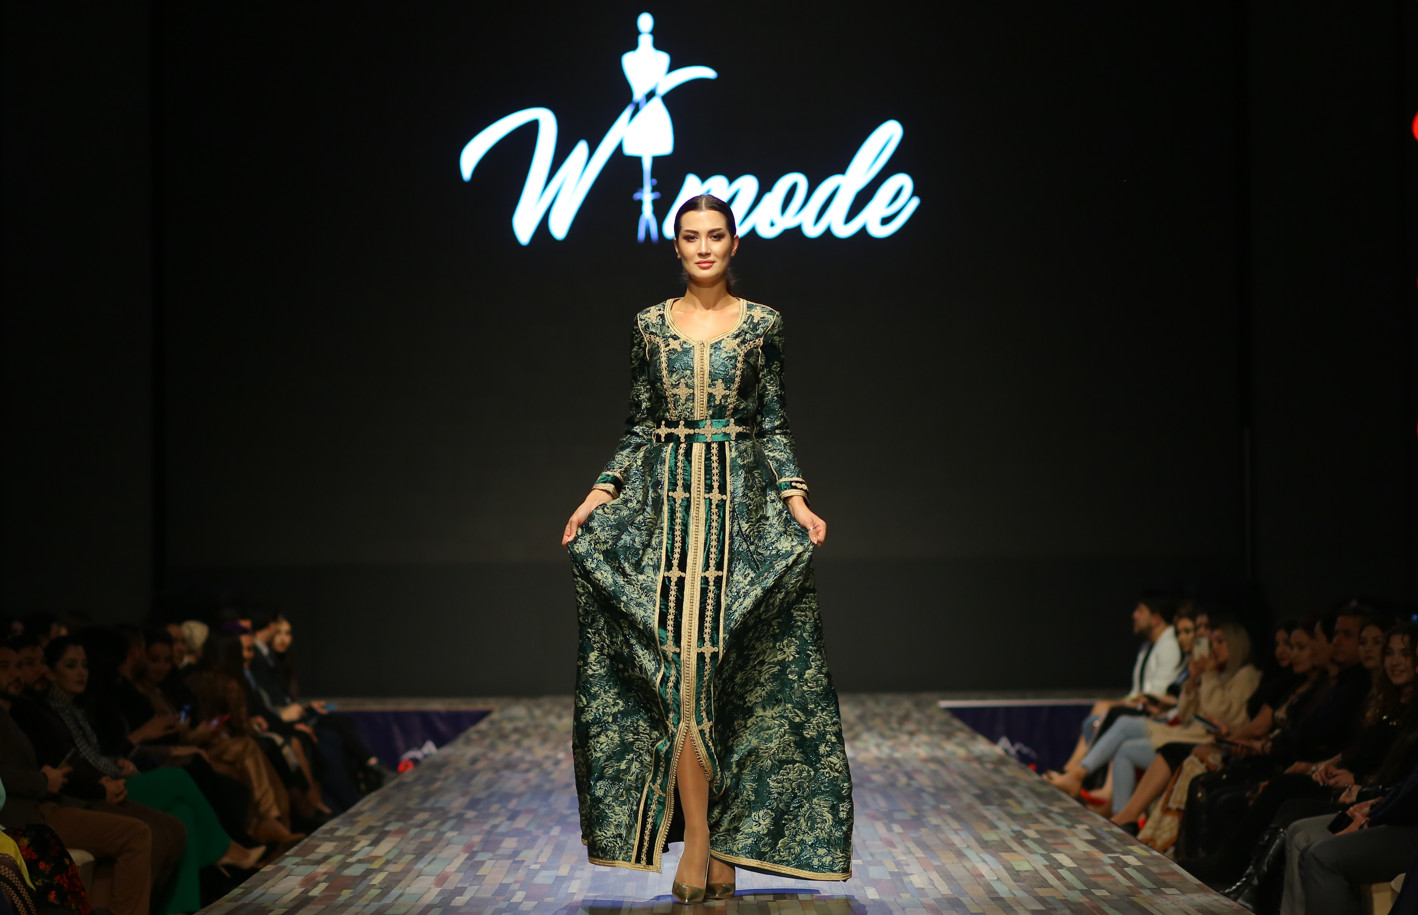 Wafaa idrissi “the fashion rebel “ during oriental fashion show